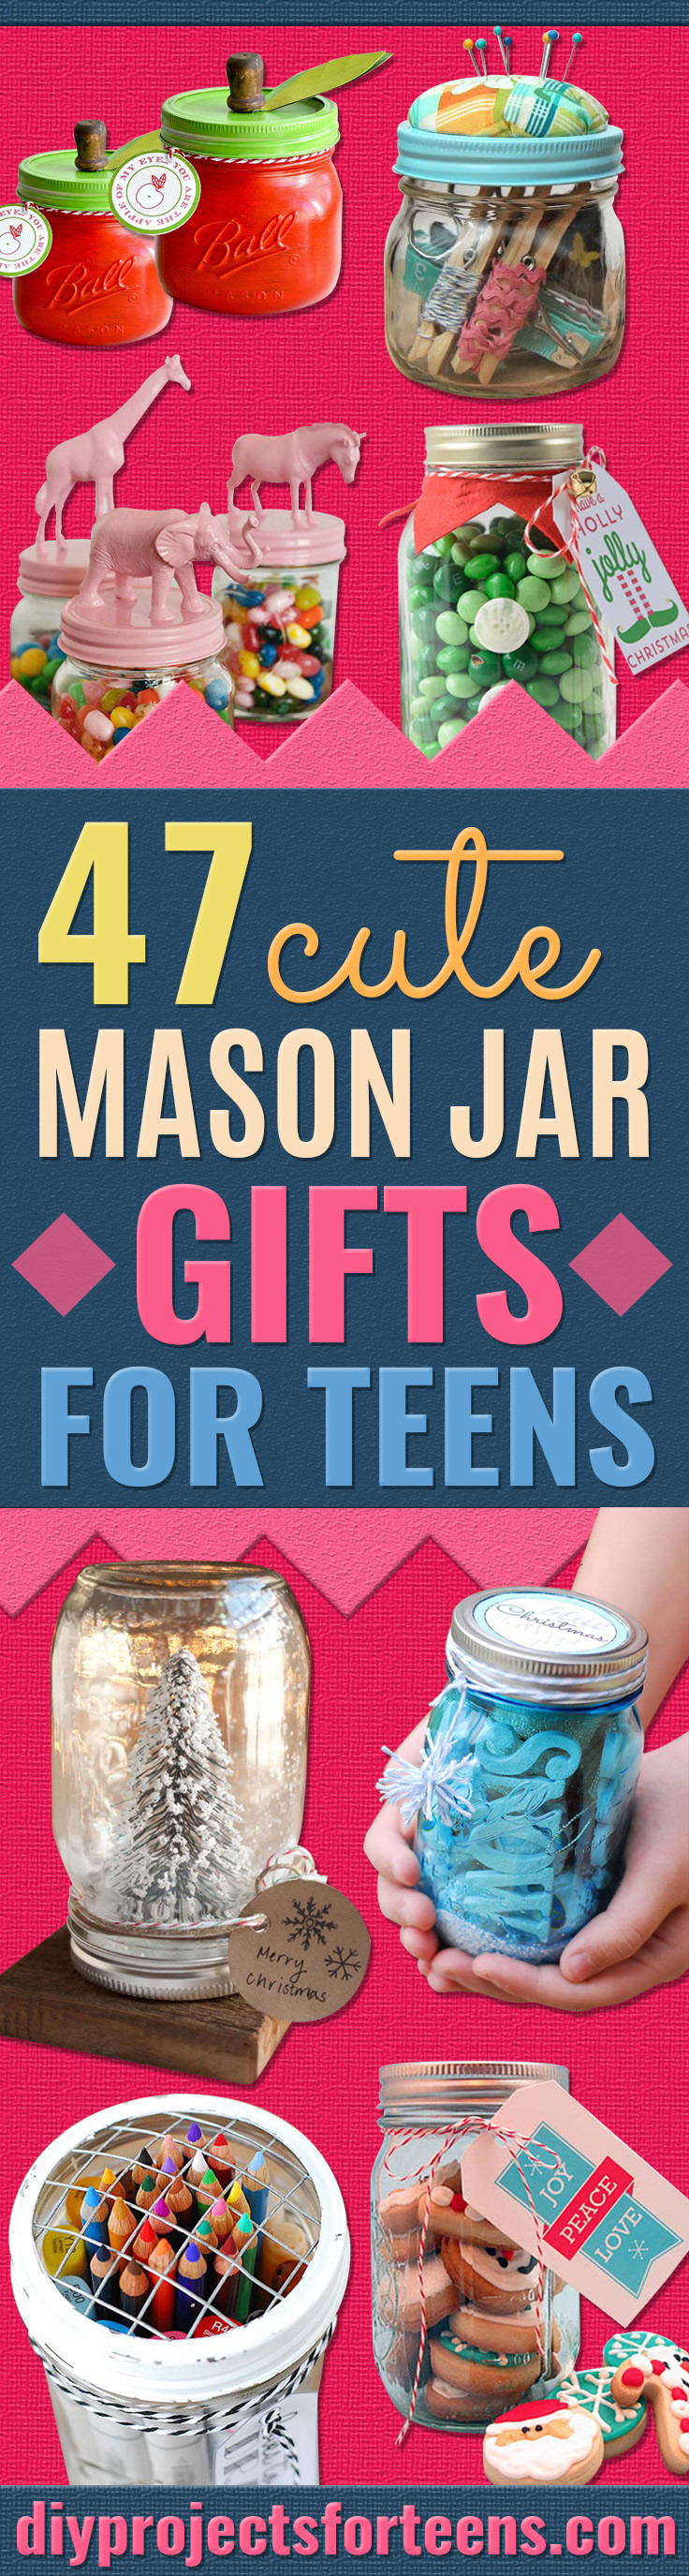 DIY Christmas Gifts For Teens
 47 Cute Mason Jar Gifts for Teens